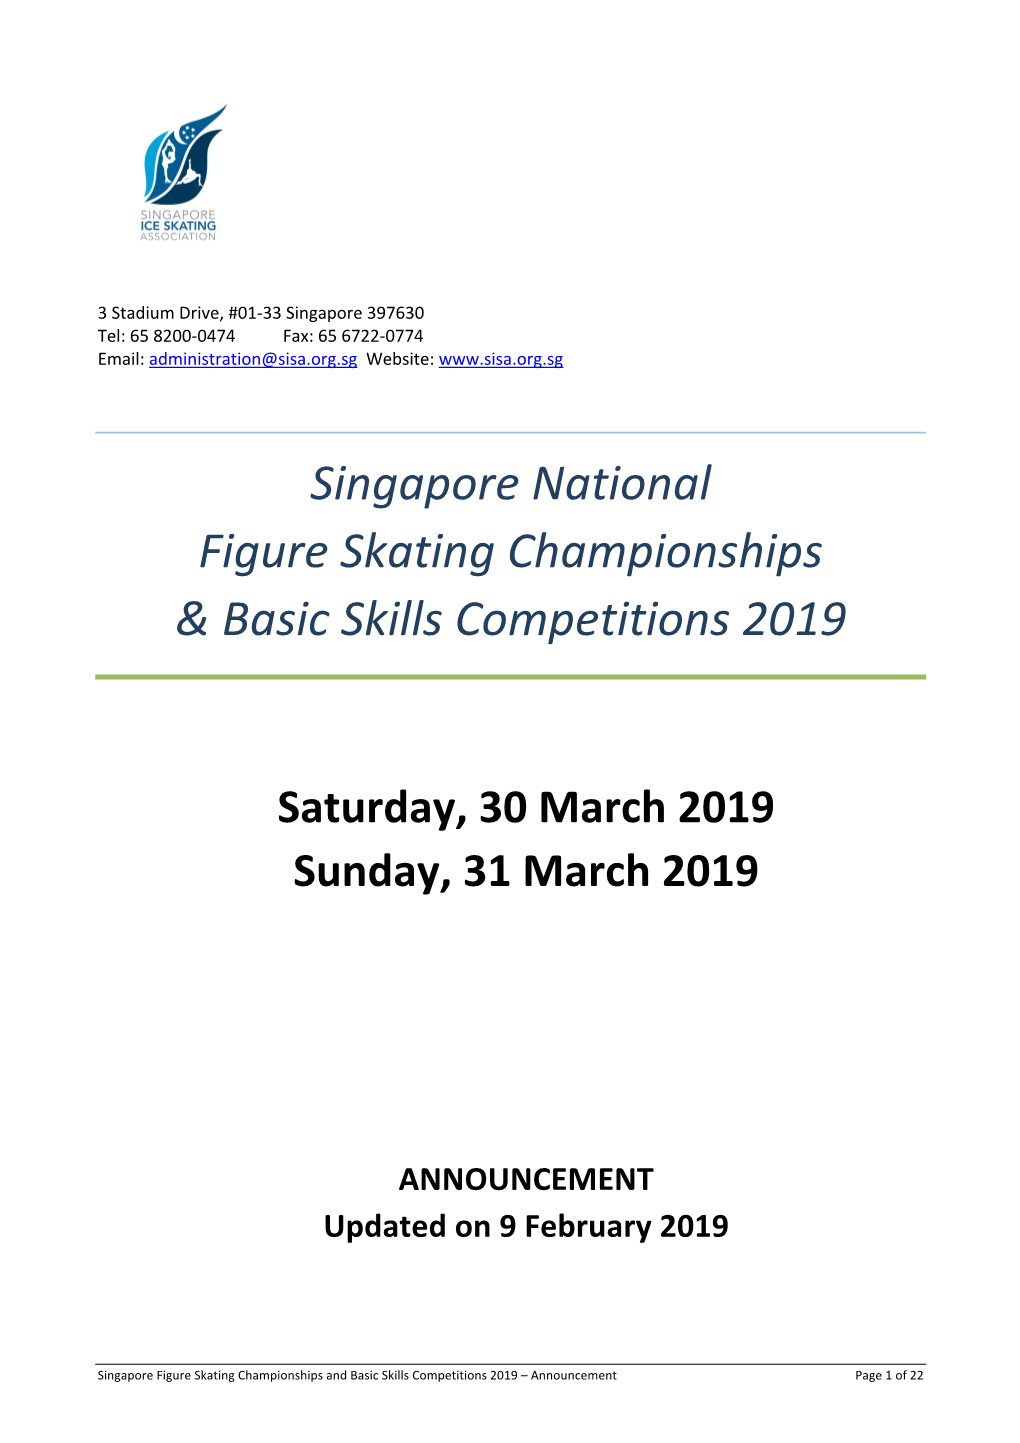 Singapore National Figure Skating Championships & Basic Skills Competitions 2019